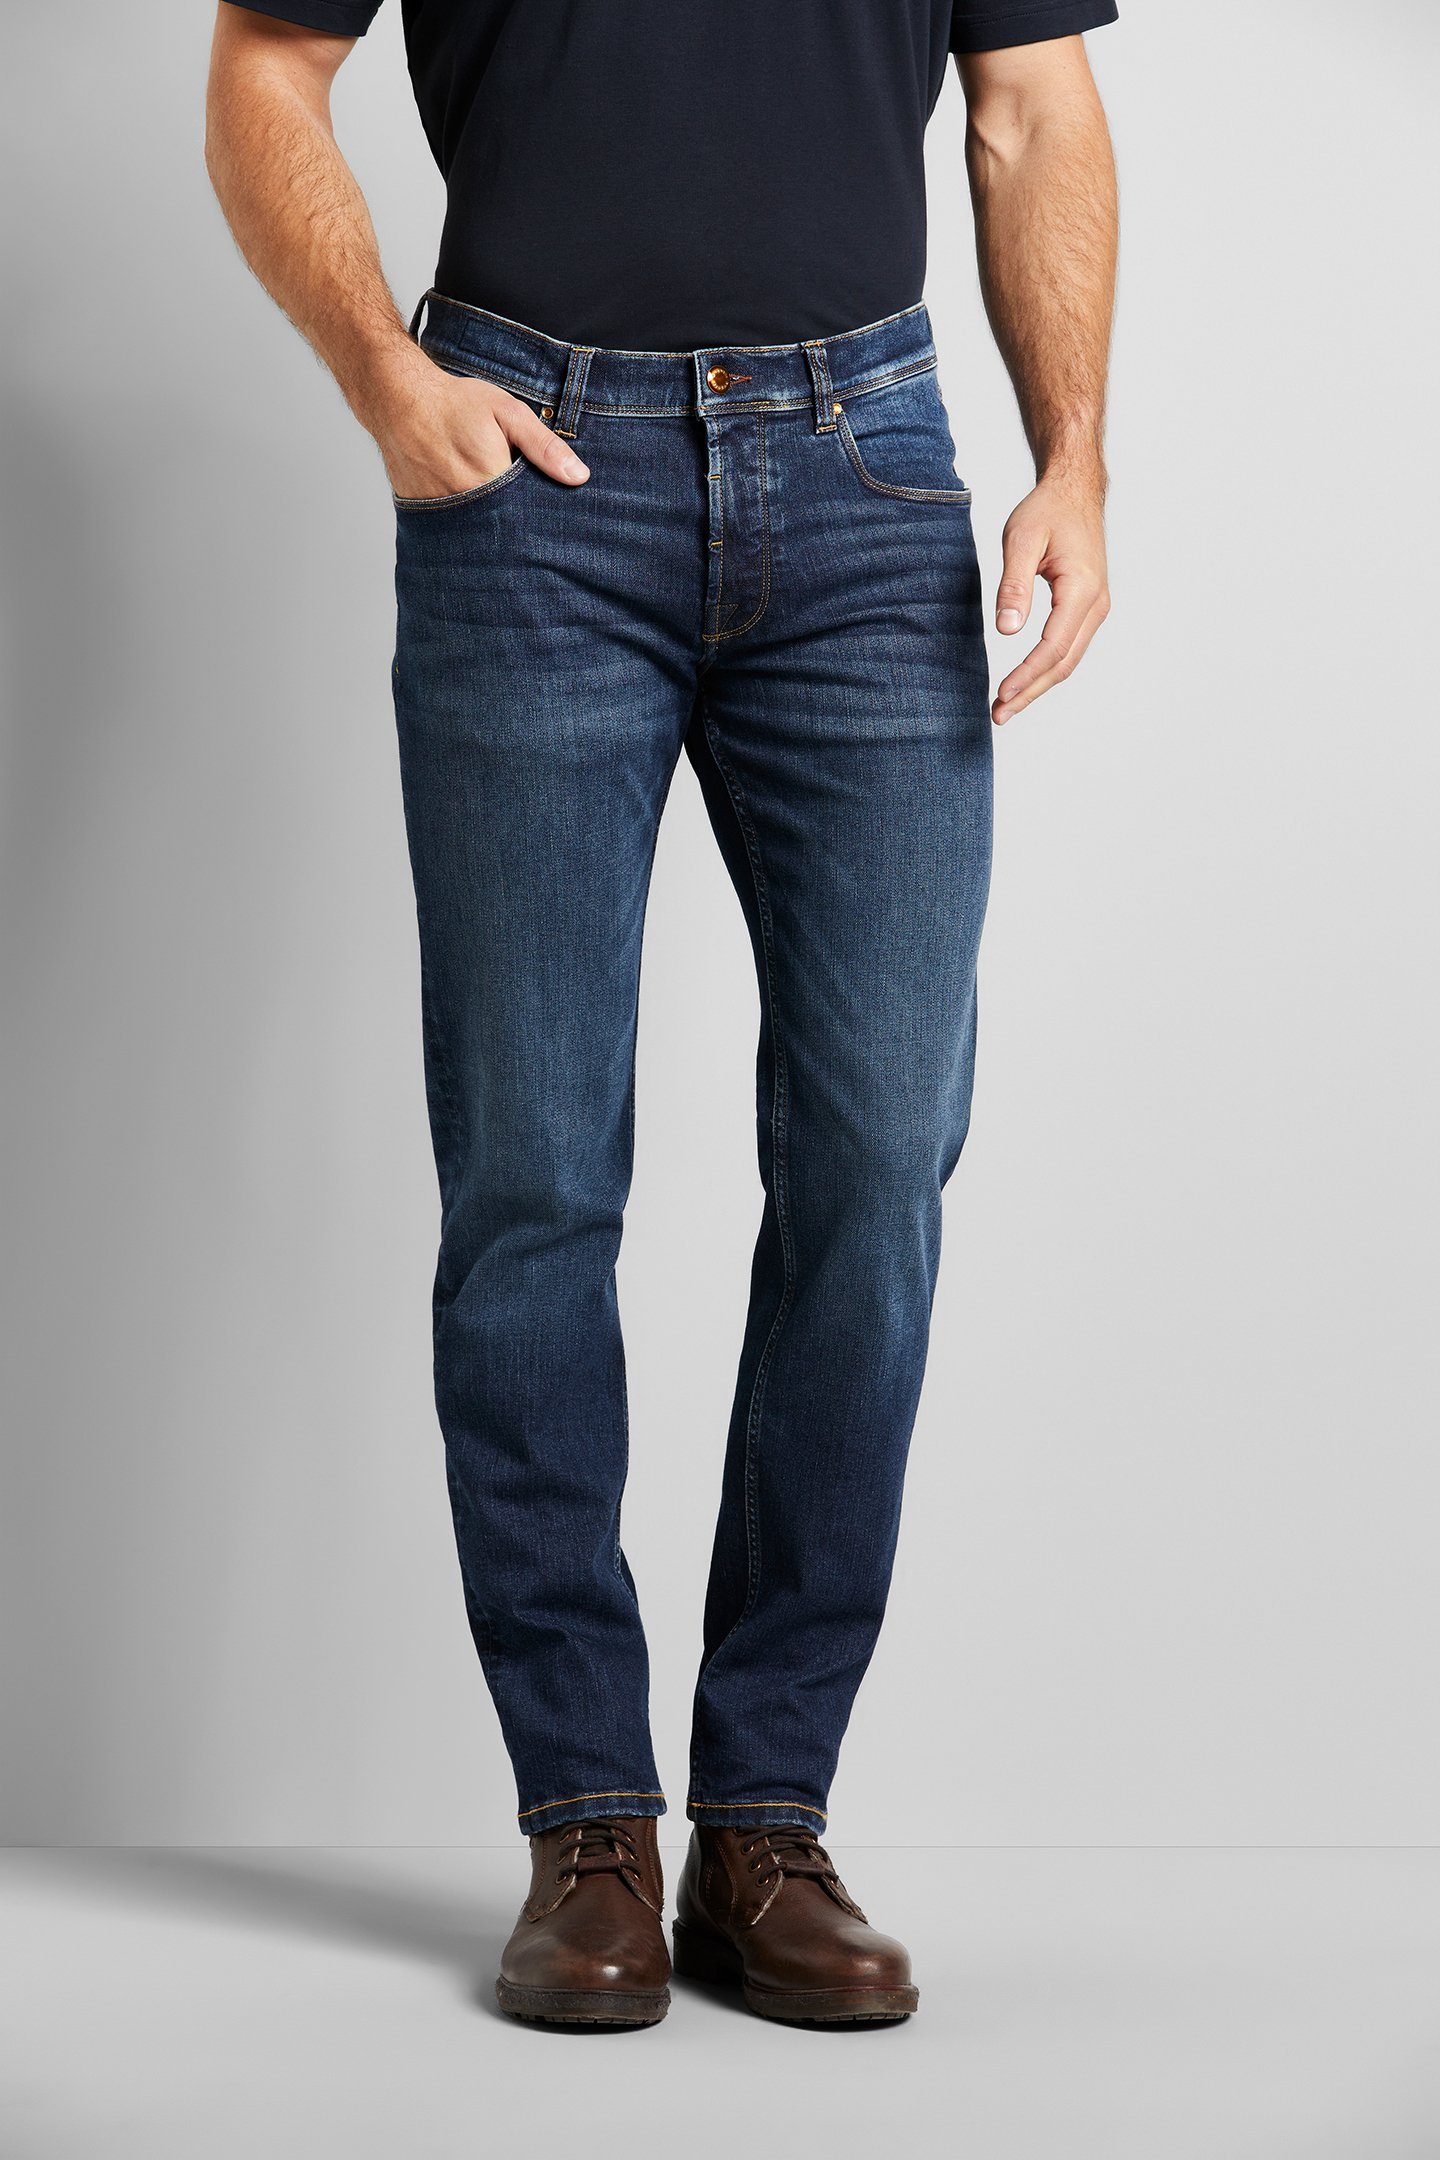 bugatti 5-Pocket-Jeans im Used Wash Look marine | Jeans